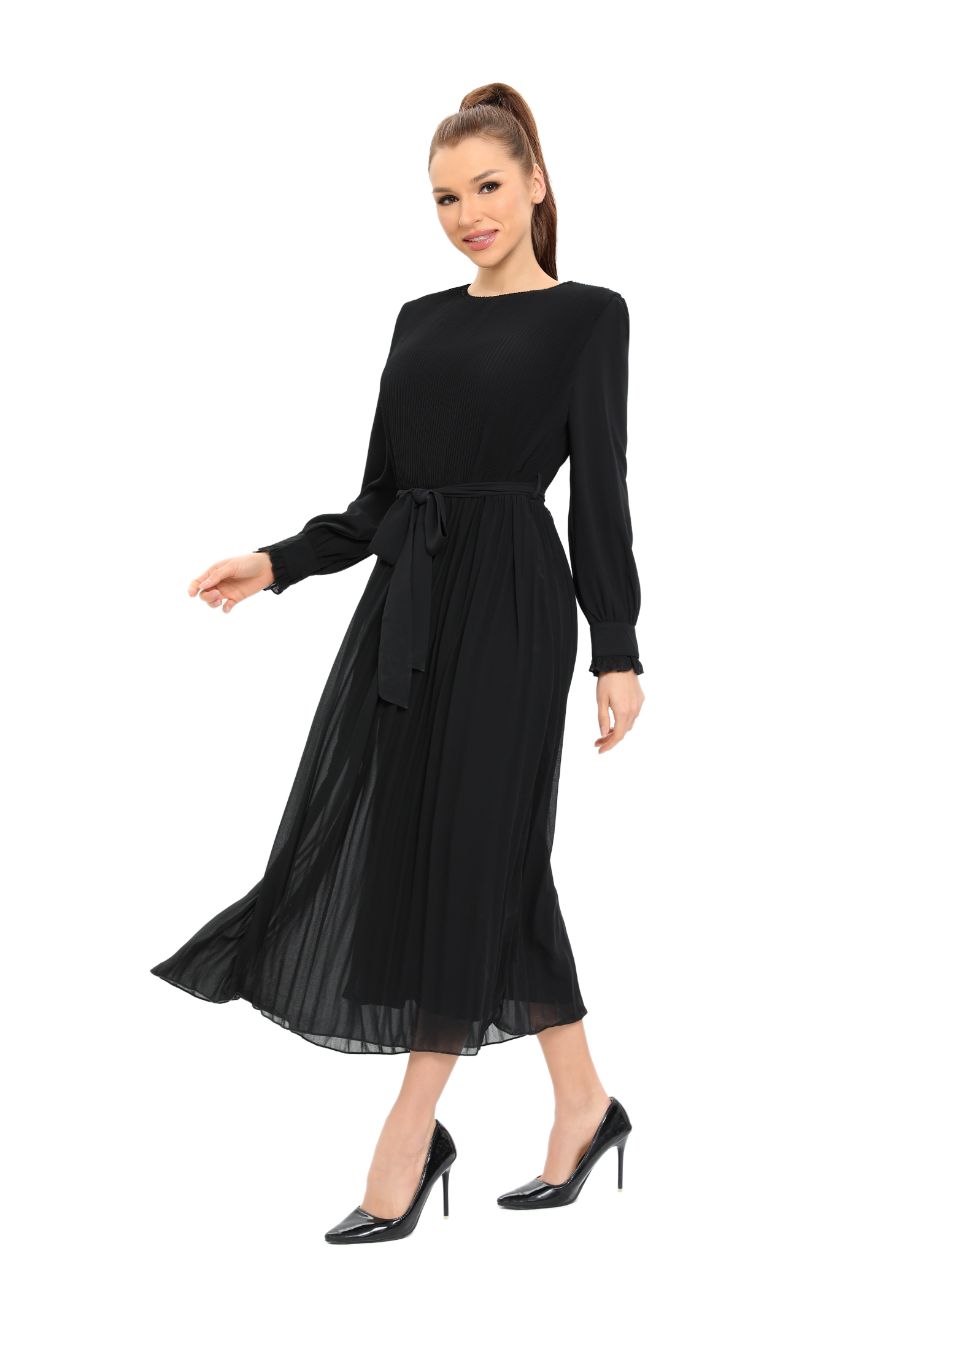 Elegant Black Micro Pleat Dress with Cuffs - seilerlanguageservices